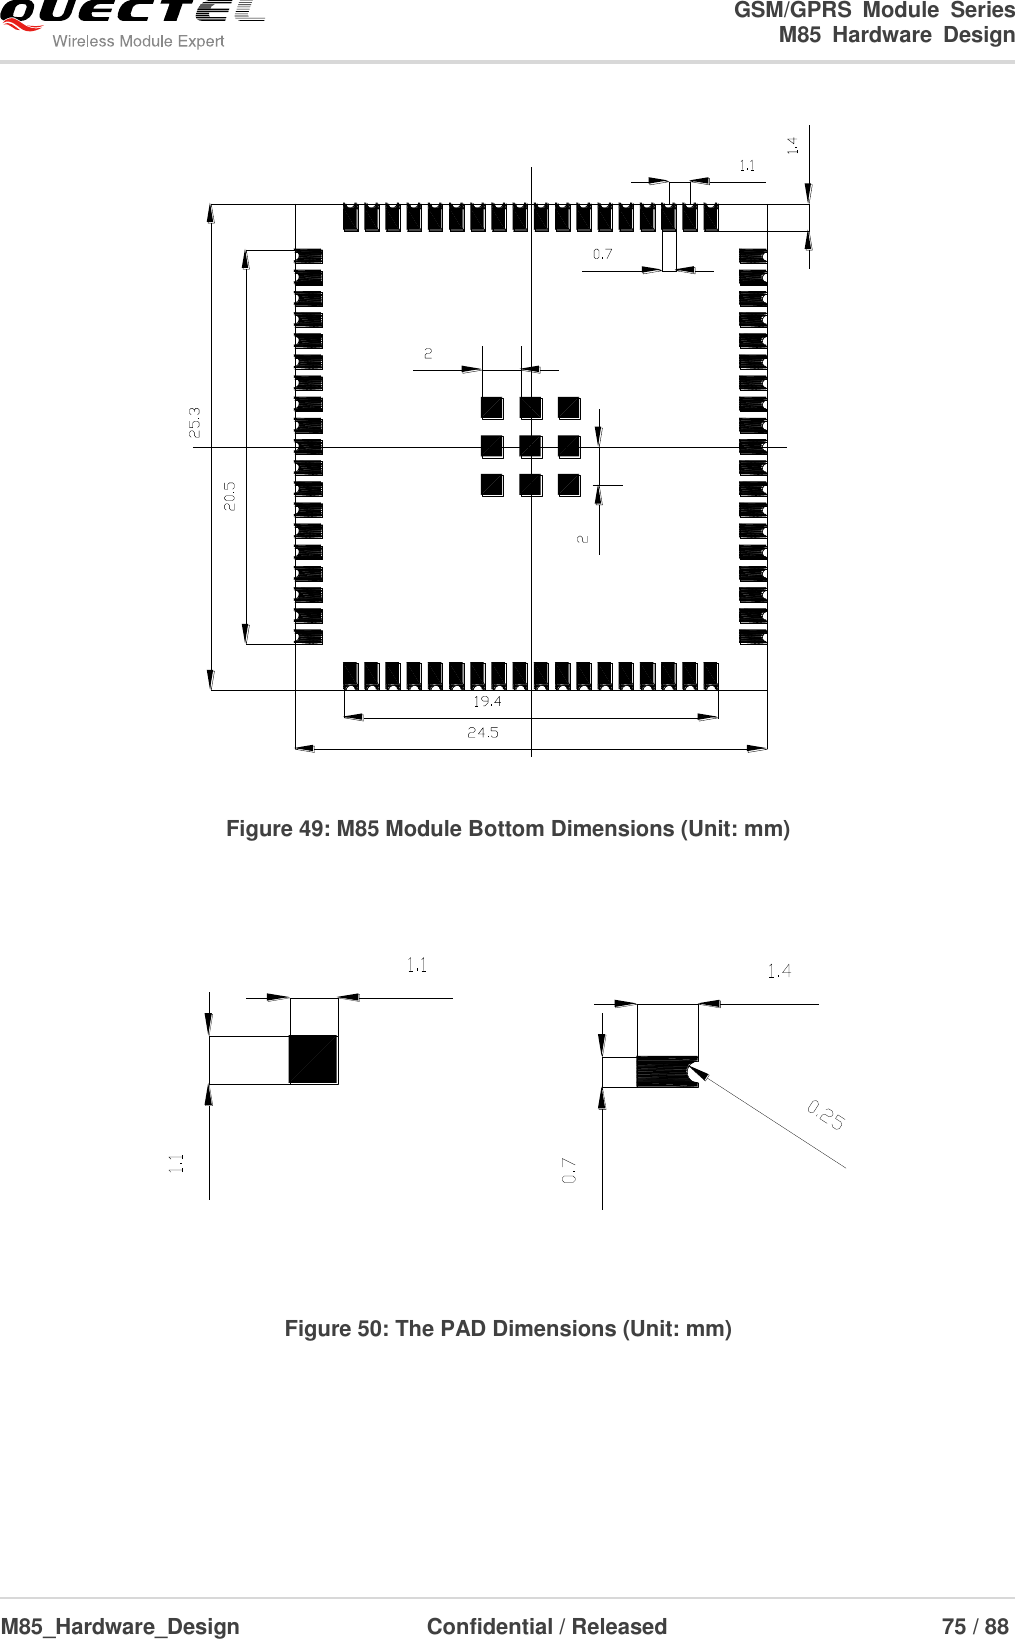                                                                                                                                               GSM/GPRS  Module  Series                                                                 M85  Hardware  Design  M85_Hardware_Design                  Confidential / Released                             75 / 88       Figure 49: M85 Module Bottom Dimensions (Unit: mm)   Figure 50: The PAD Dimensions (Unit: mm)     